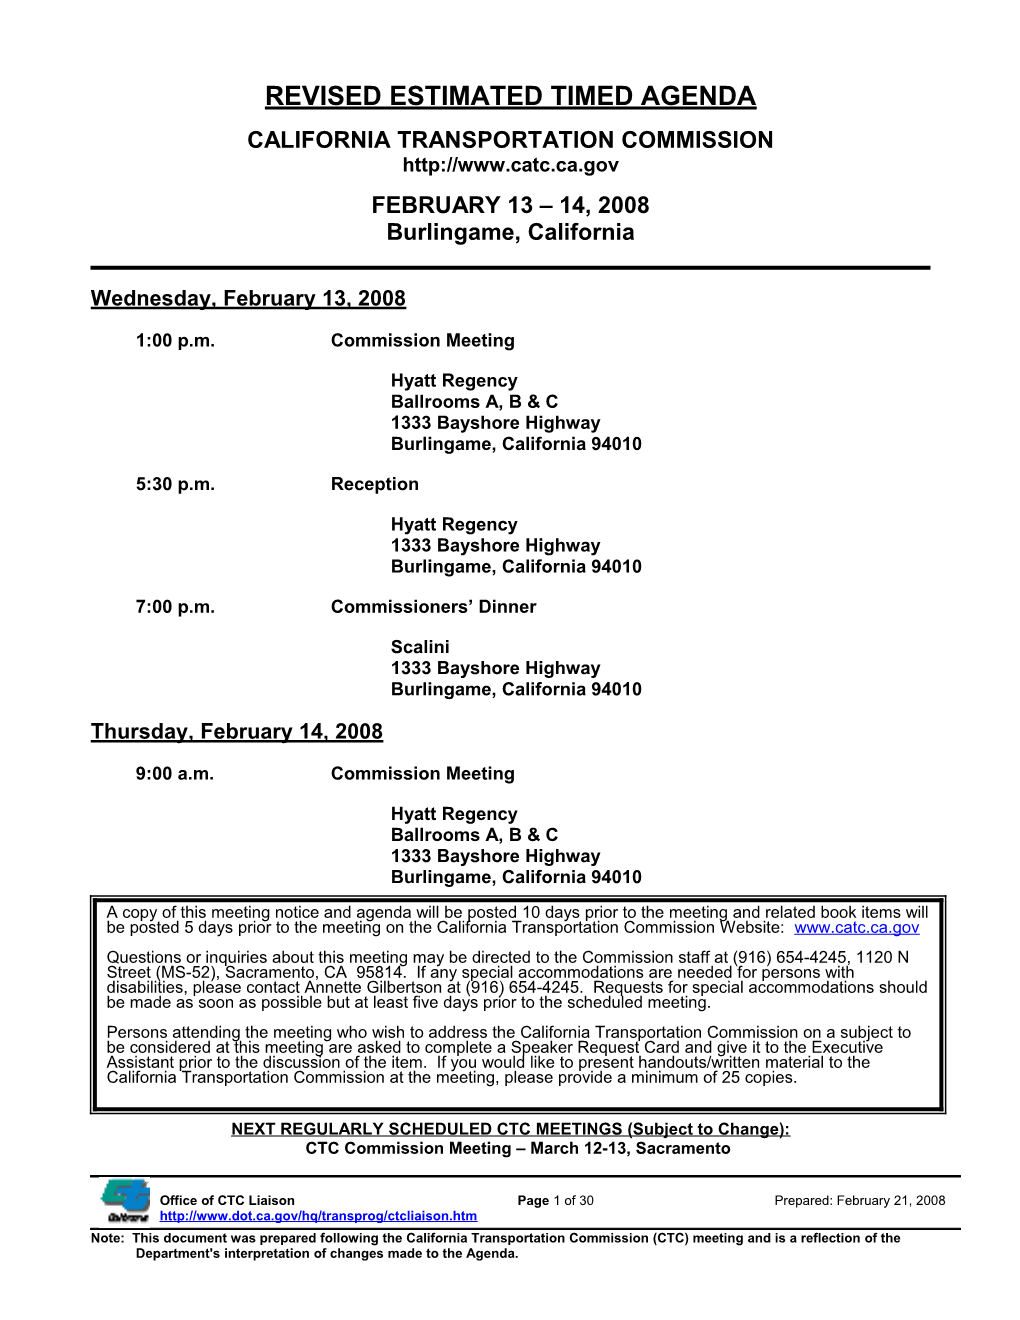 CTC MEETING AGENDA REVISED February 13-14, 2008